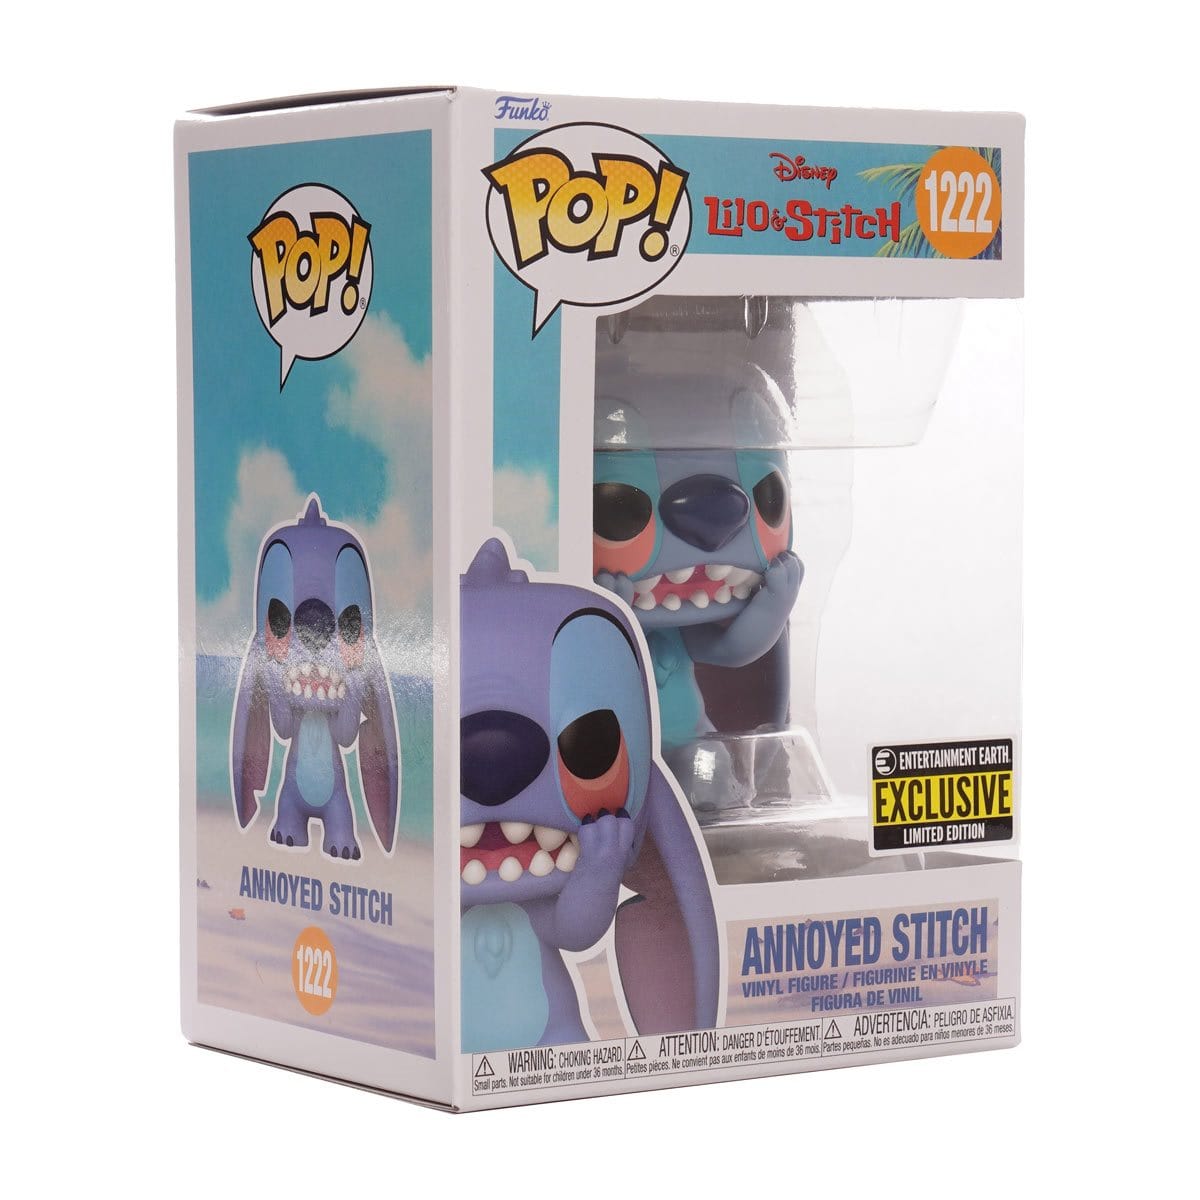 Funko POP! Annoyed Stitch #1222 EE Exclusive - Pop-O-Loco - Funko